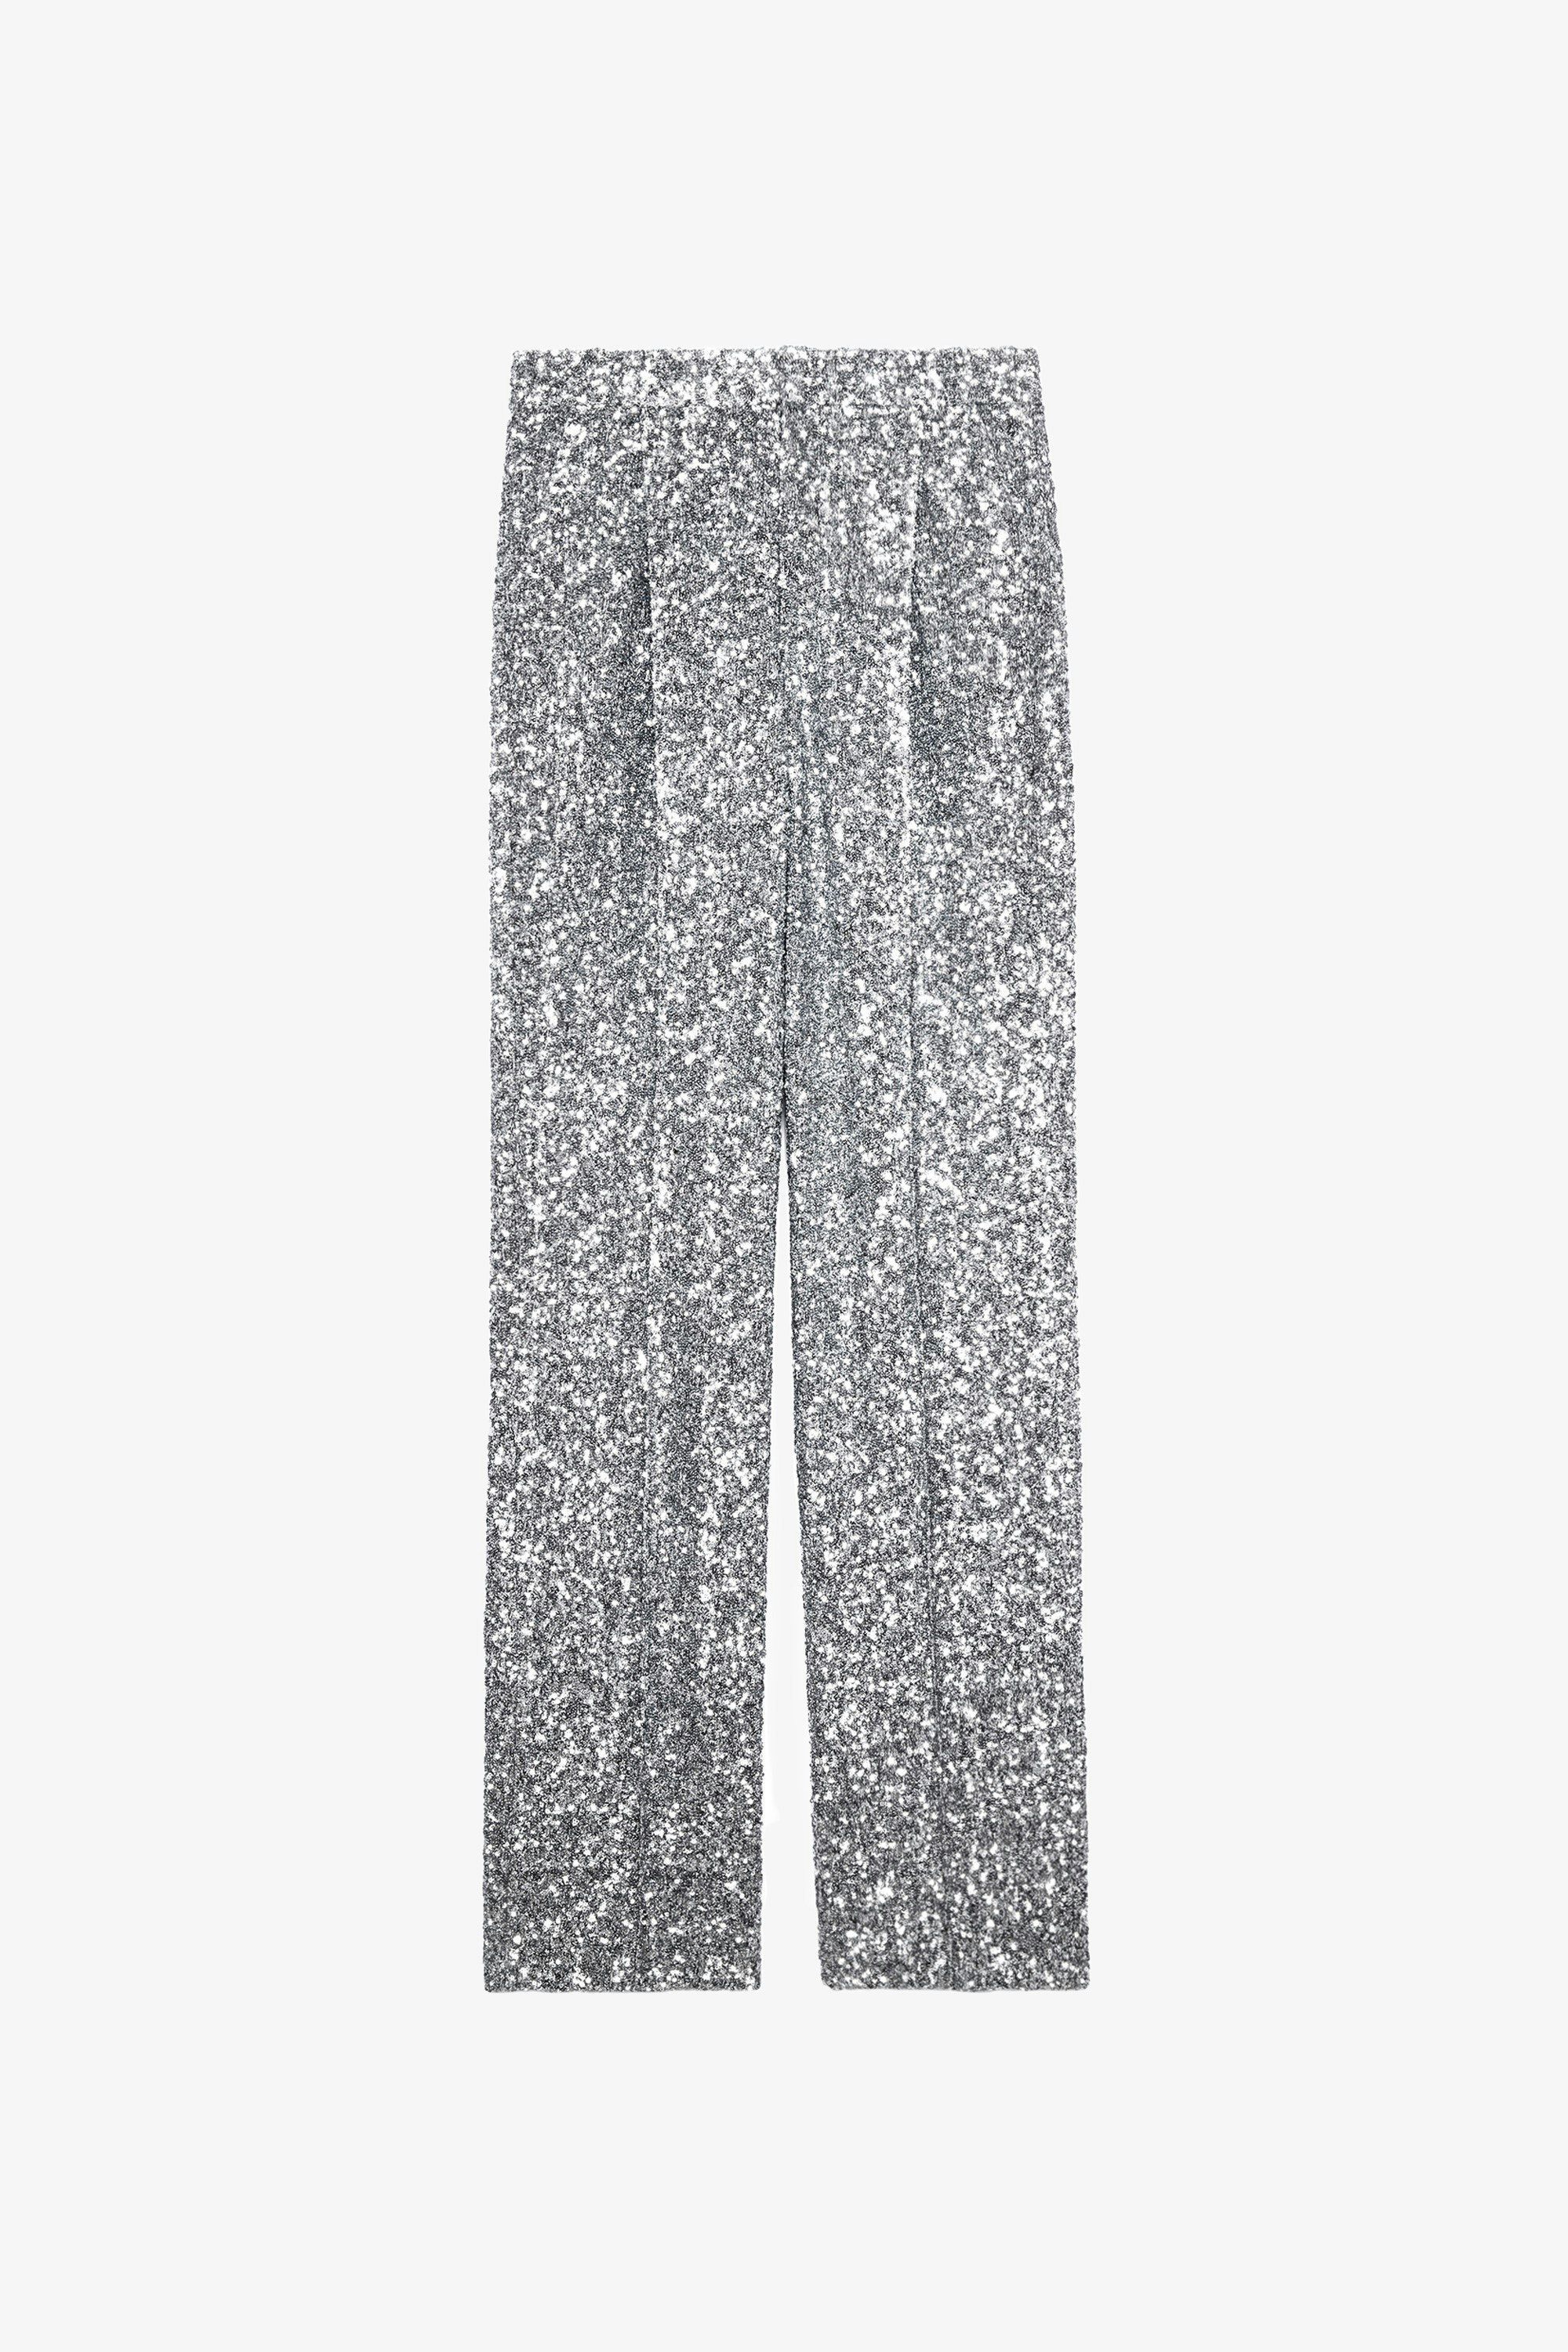 Pantaloni Gitane Paillettes Pantaloni da tailleur grigi con paillettes da donna.